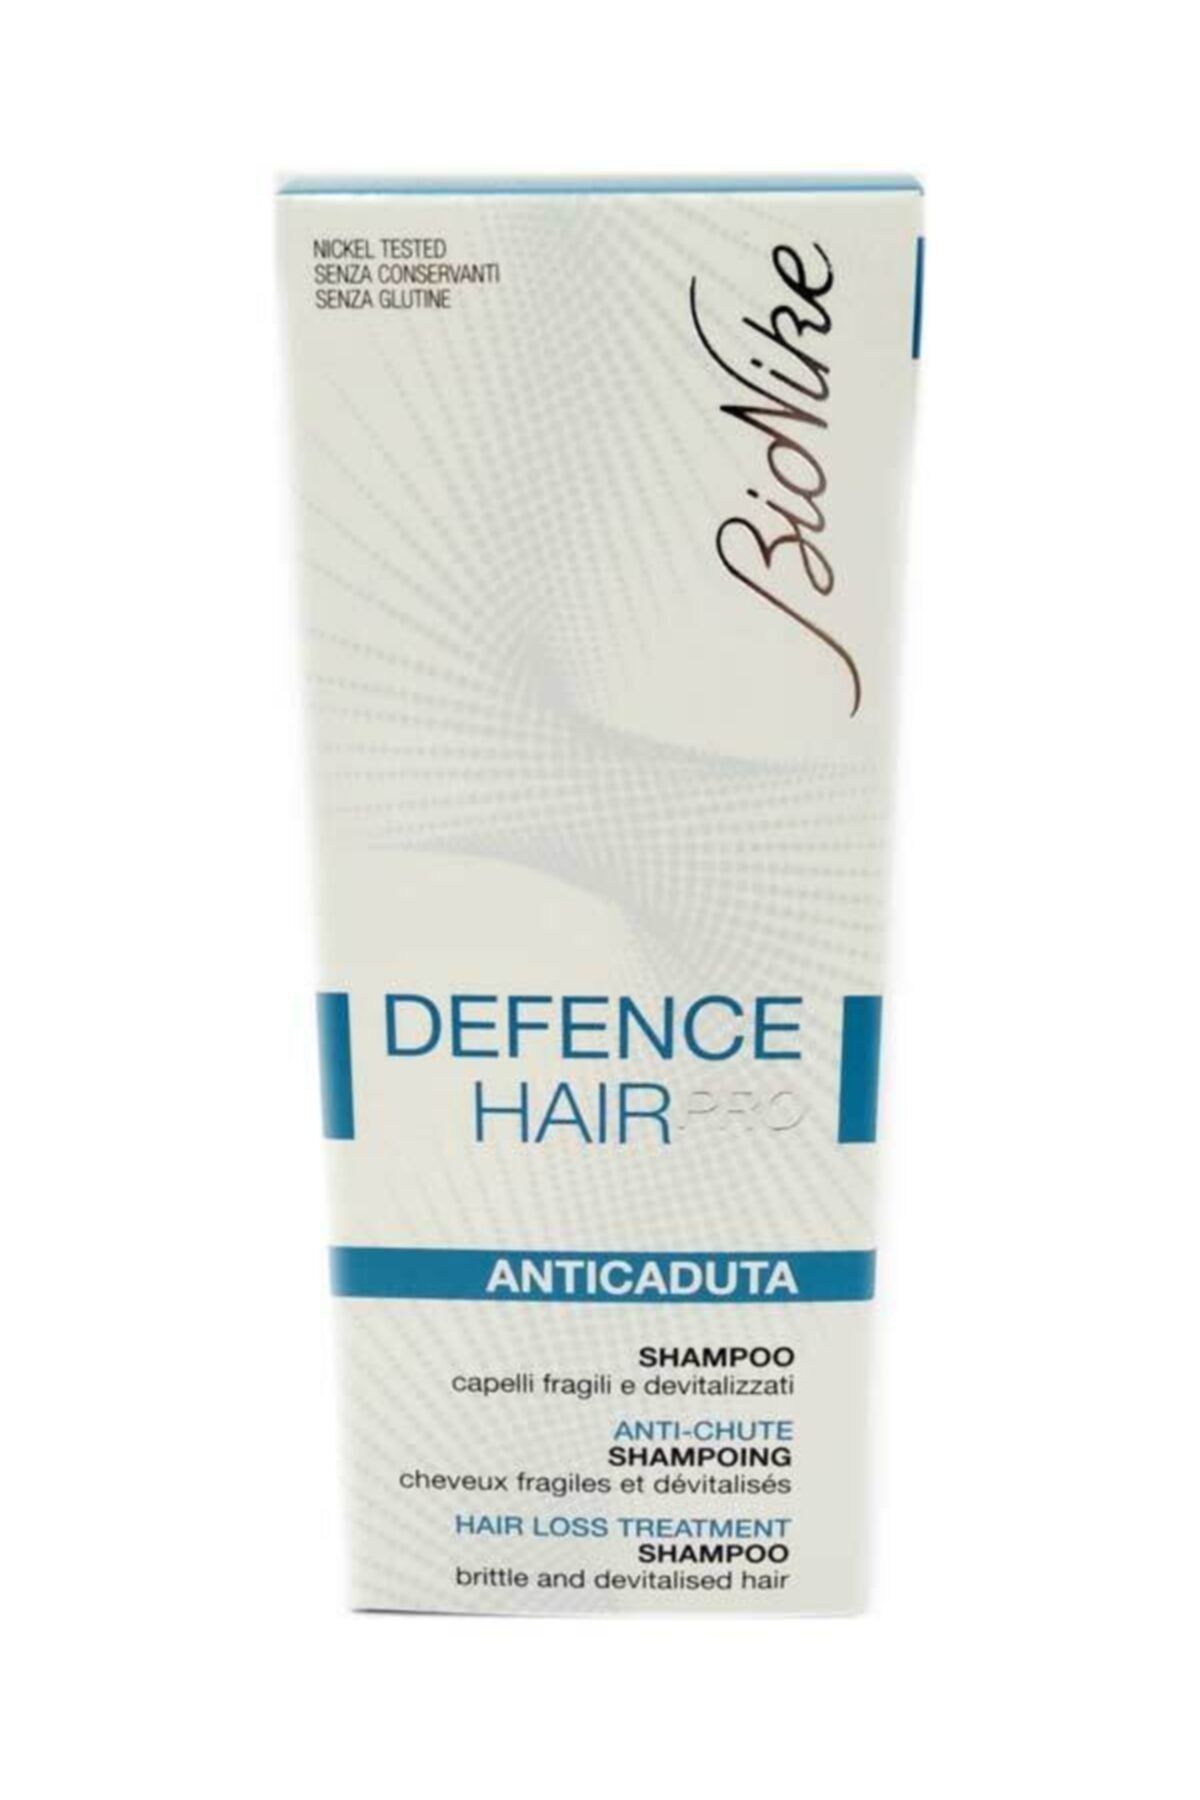 BioNike Defence Hair Pro Anticaduta Shampoo